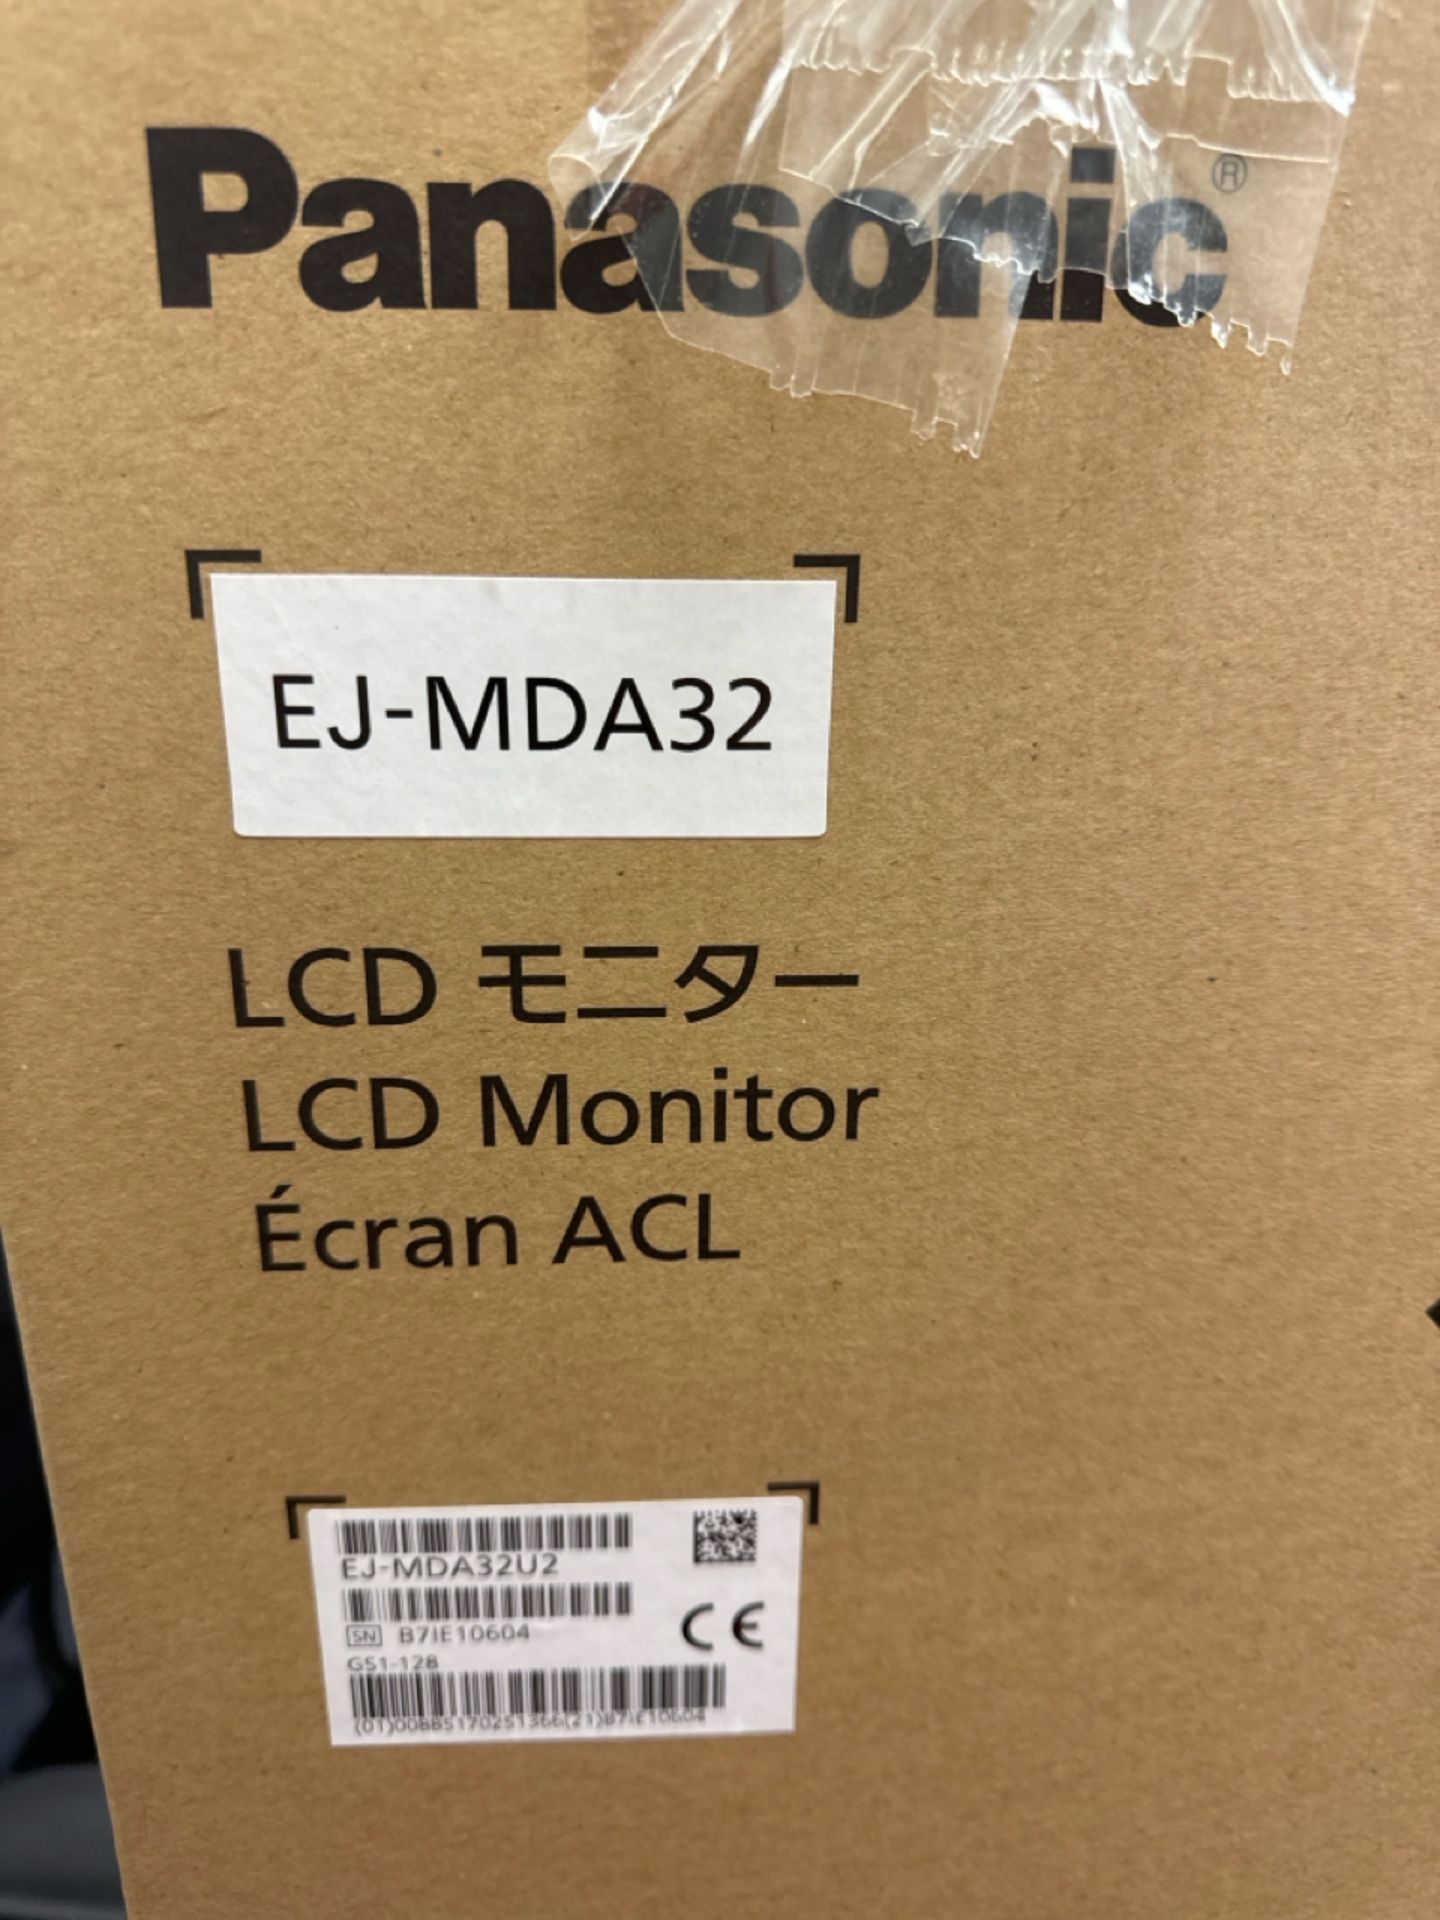 Panasonic 3D Medical Monitor - Image 2 of 2